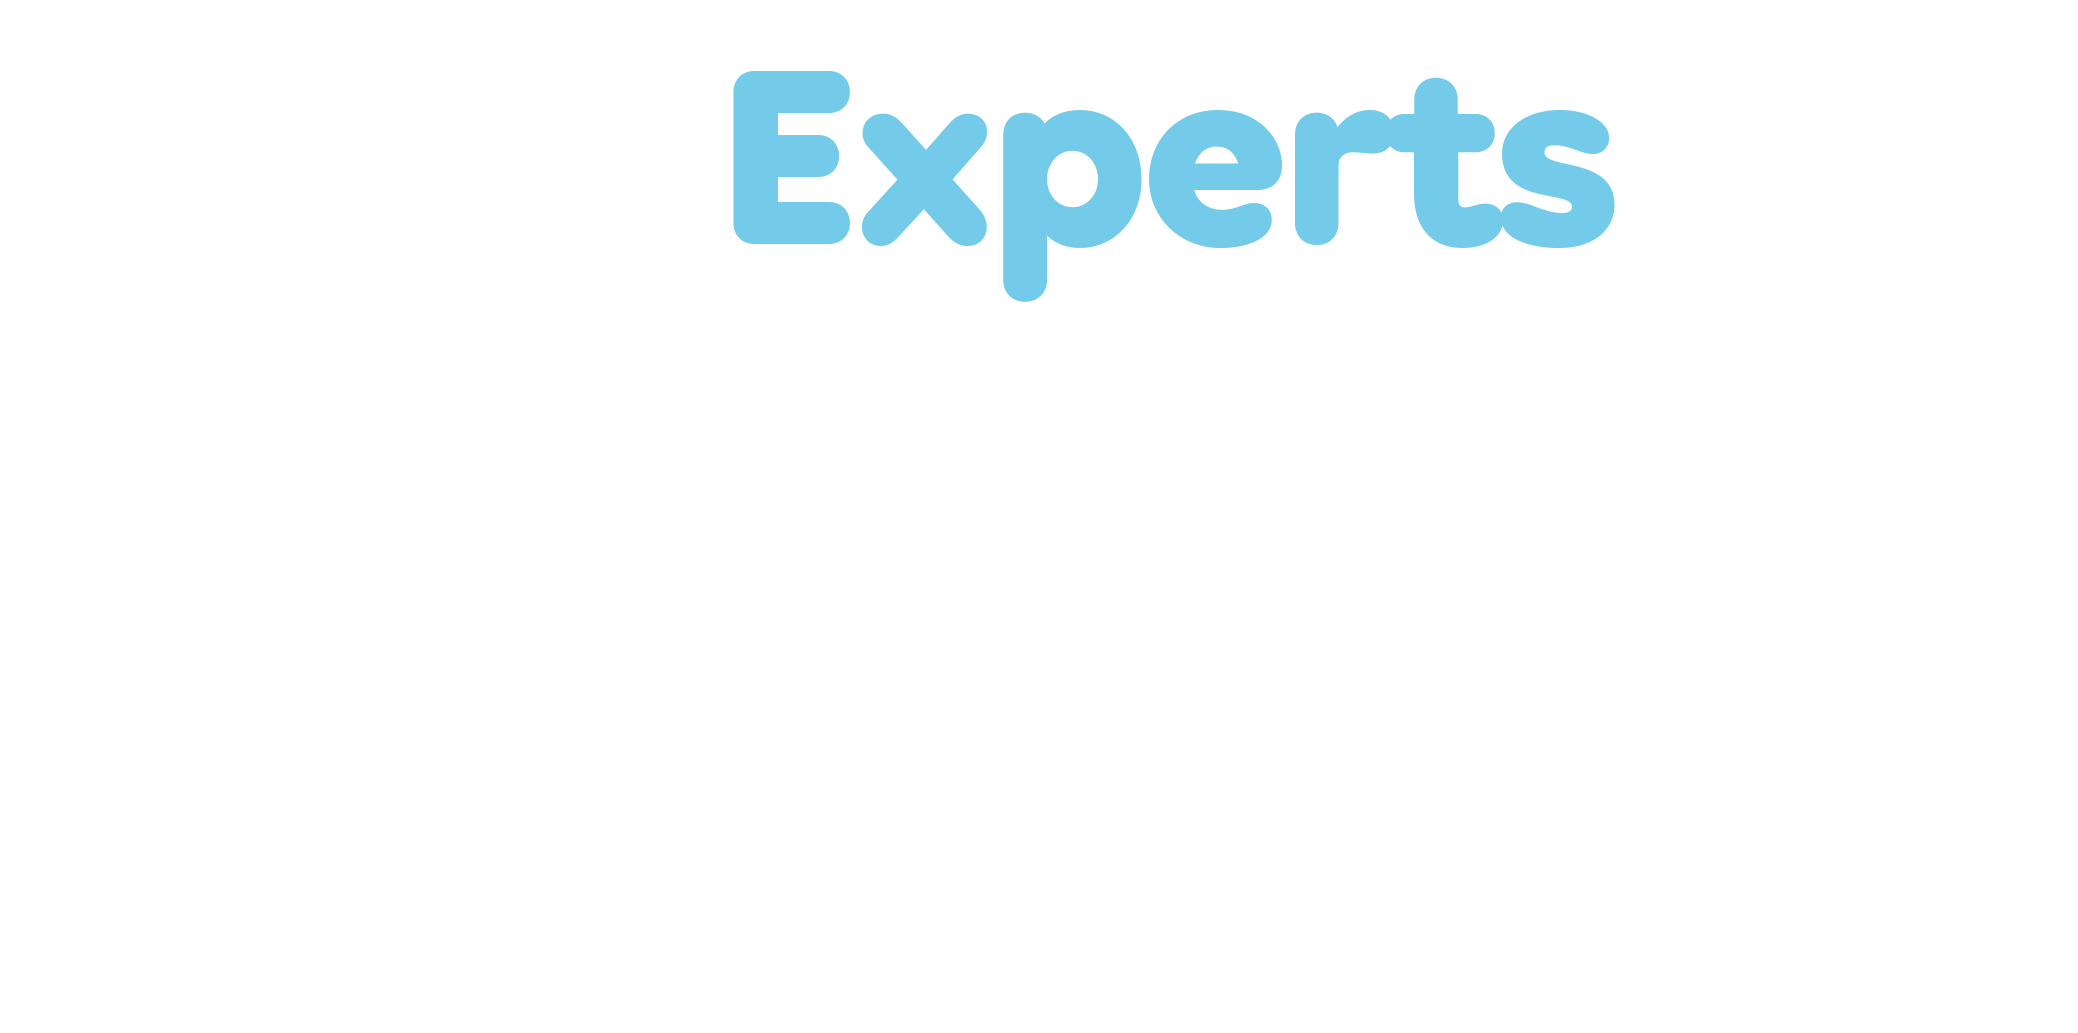 I was wondering: Como utilizar - English Experts